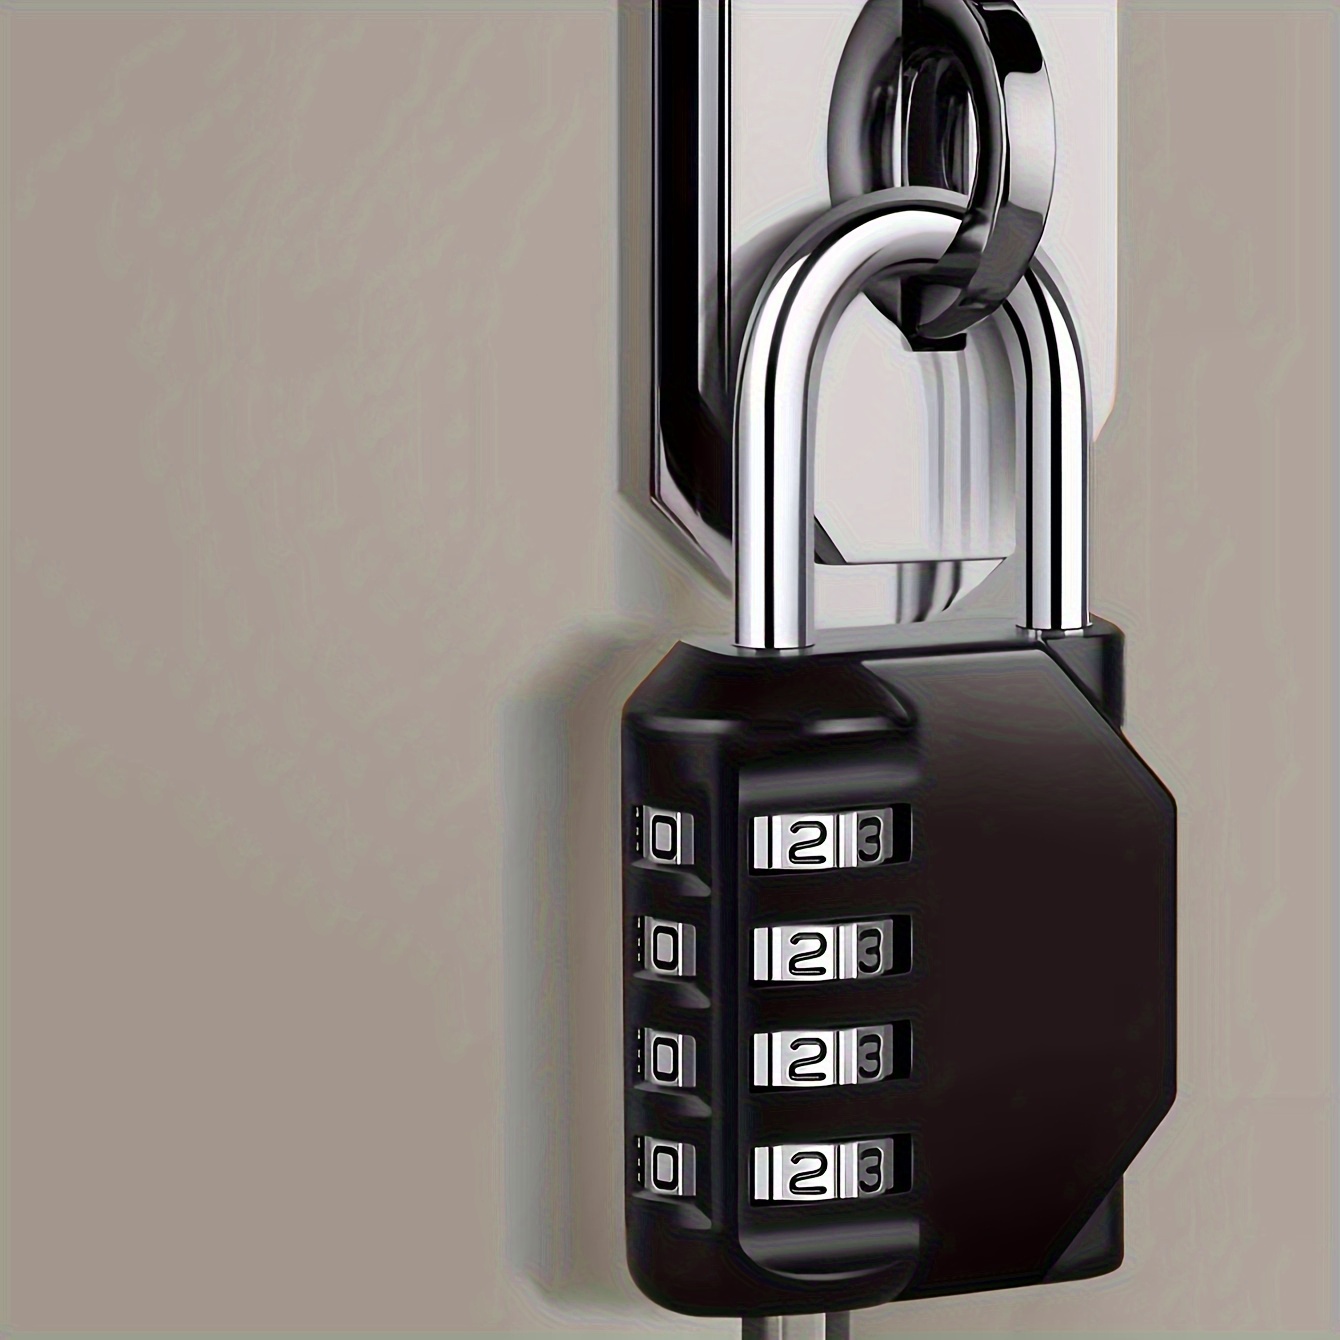 

Combination Lock 4 Digit Outdoor Padlock For School Gym Locker, Sports Locker, Fence, Toolbox, Gate, Case, Hasp Storage (black, Red, Silvery)